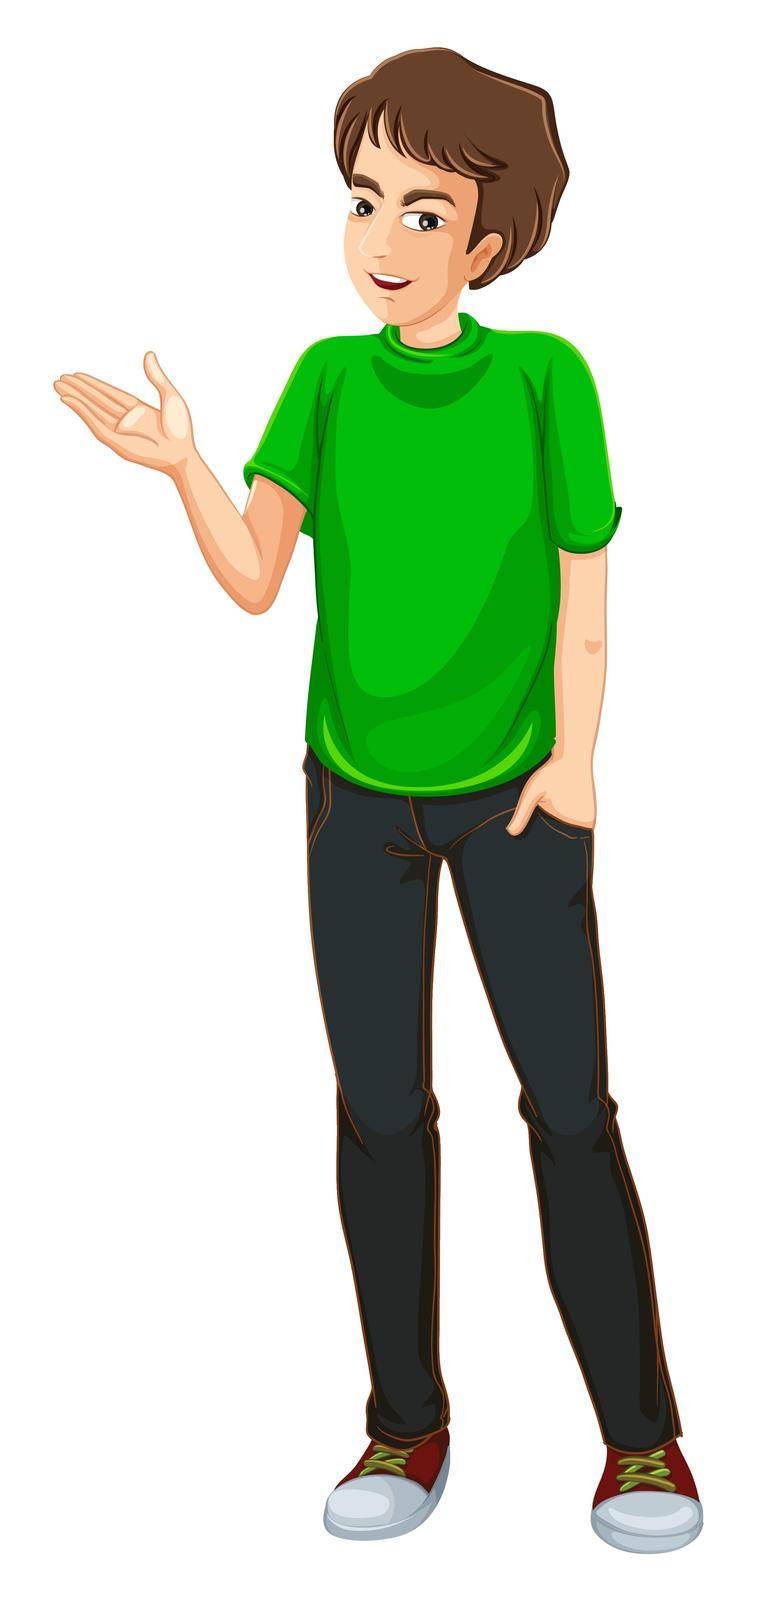 A Young Man wearing a green shirt illustration